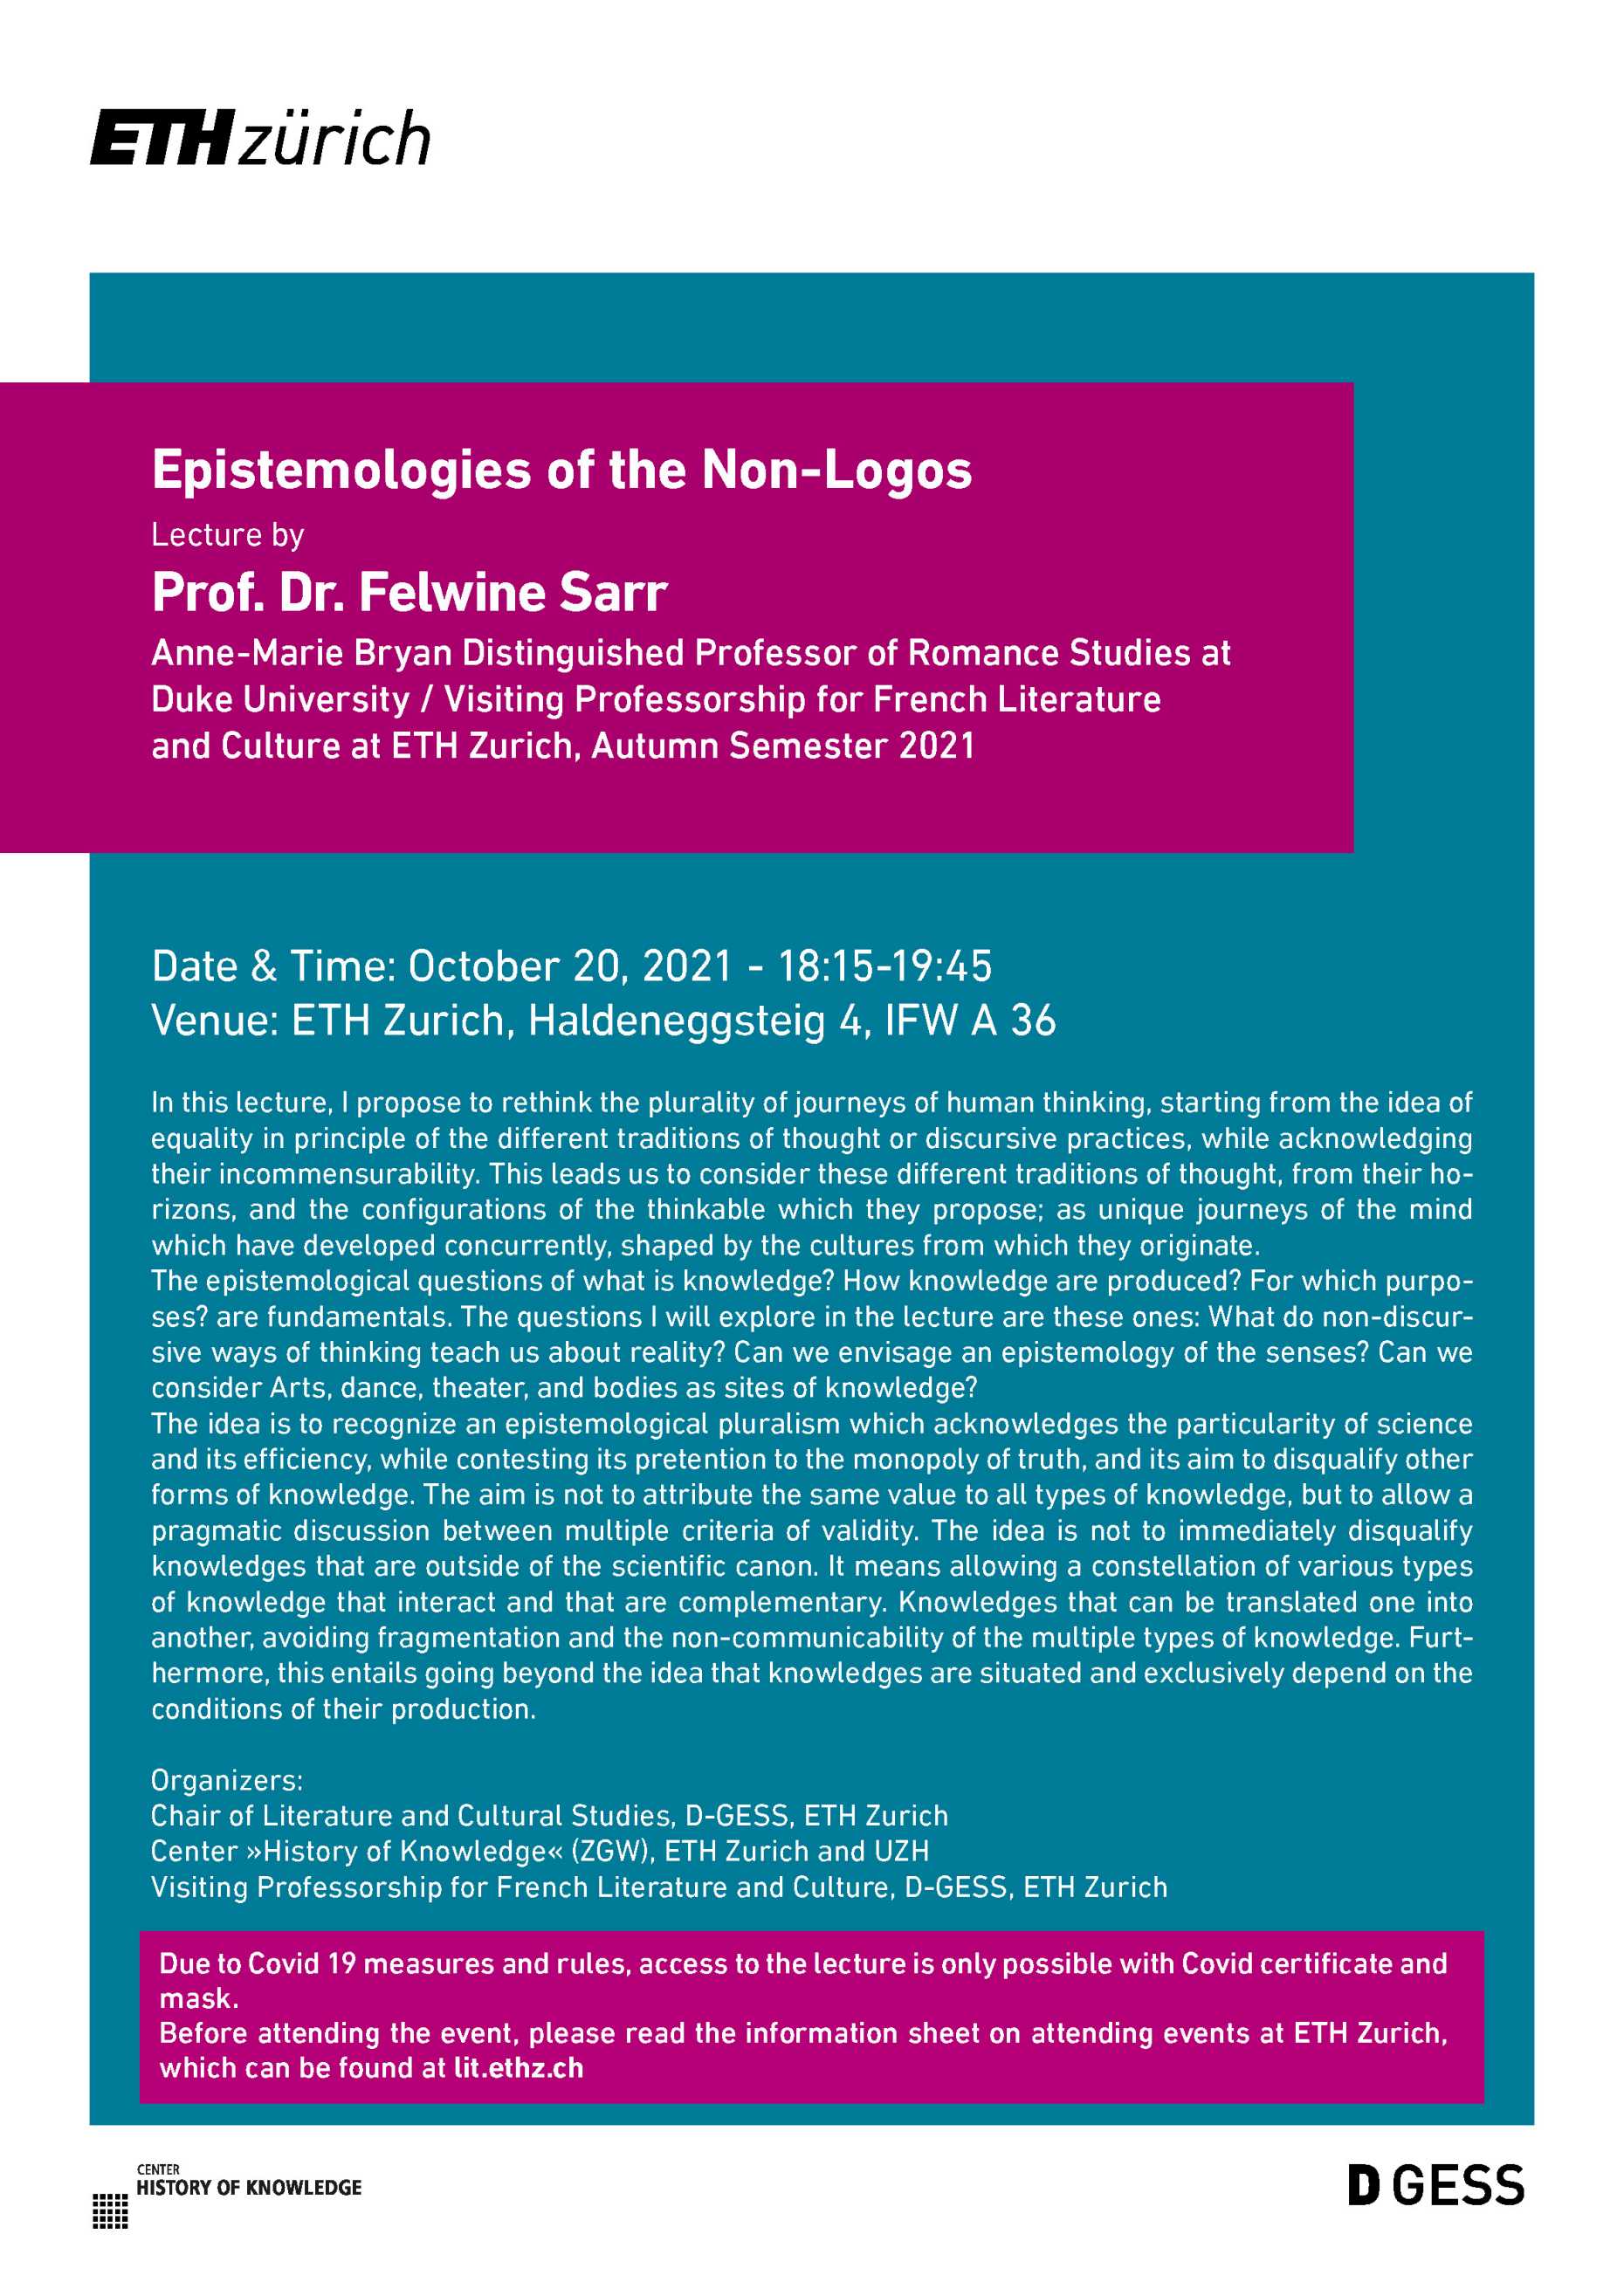 Epistemologies of the Non-Logos, public Lecture by Felwine Sarr